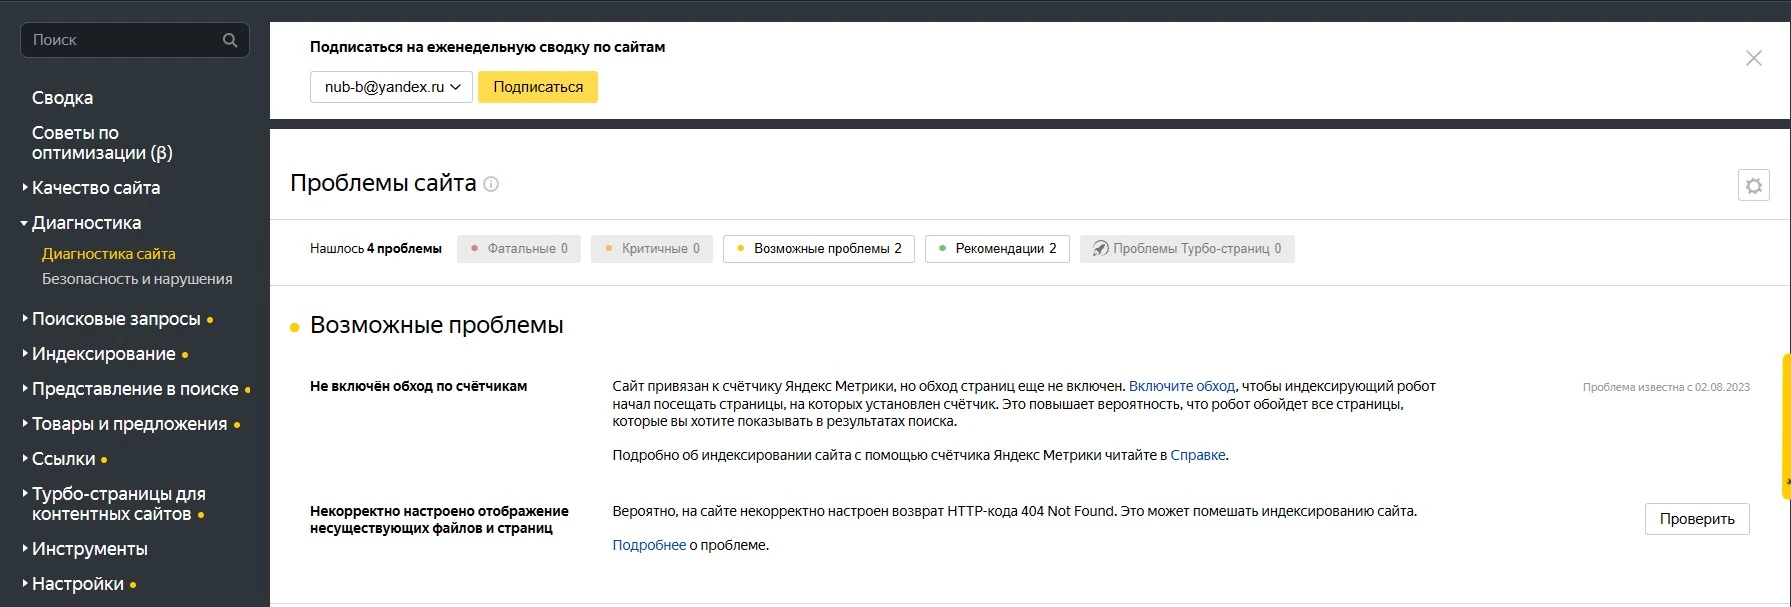 Диагностика сайта в Яндекс.Вебмастер